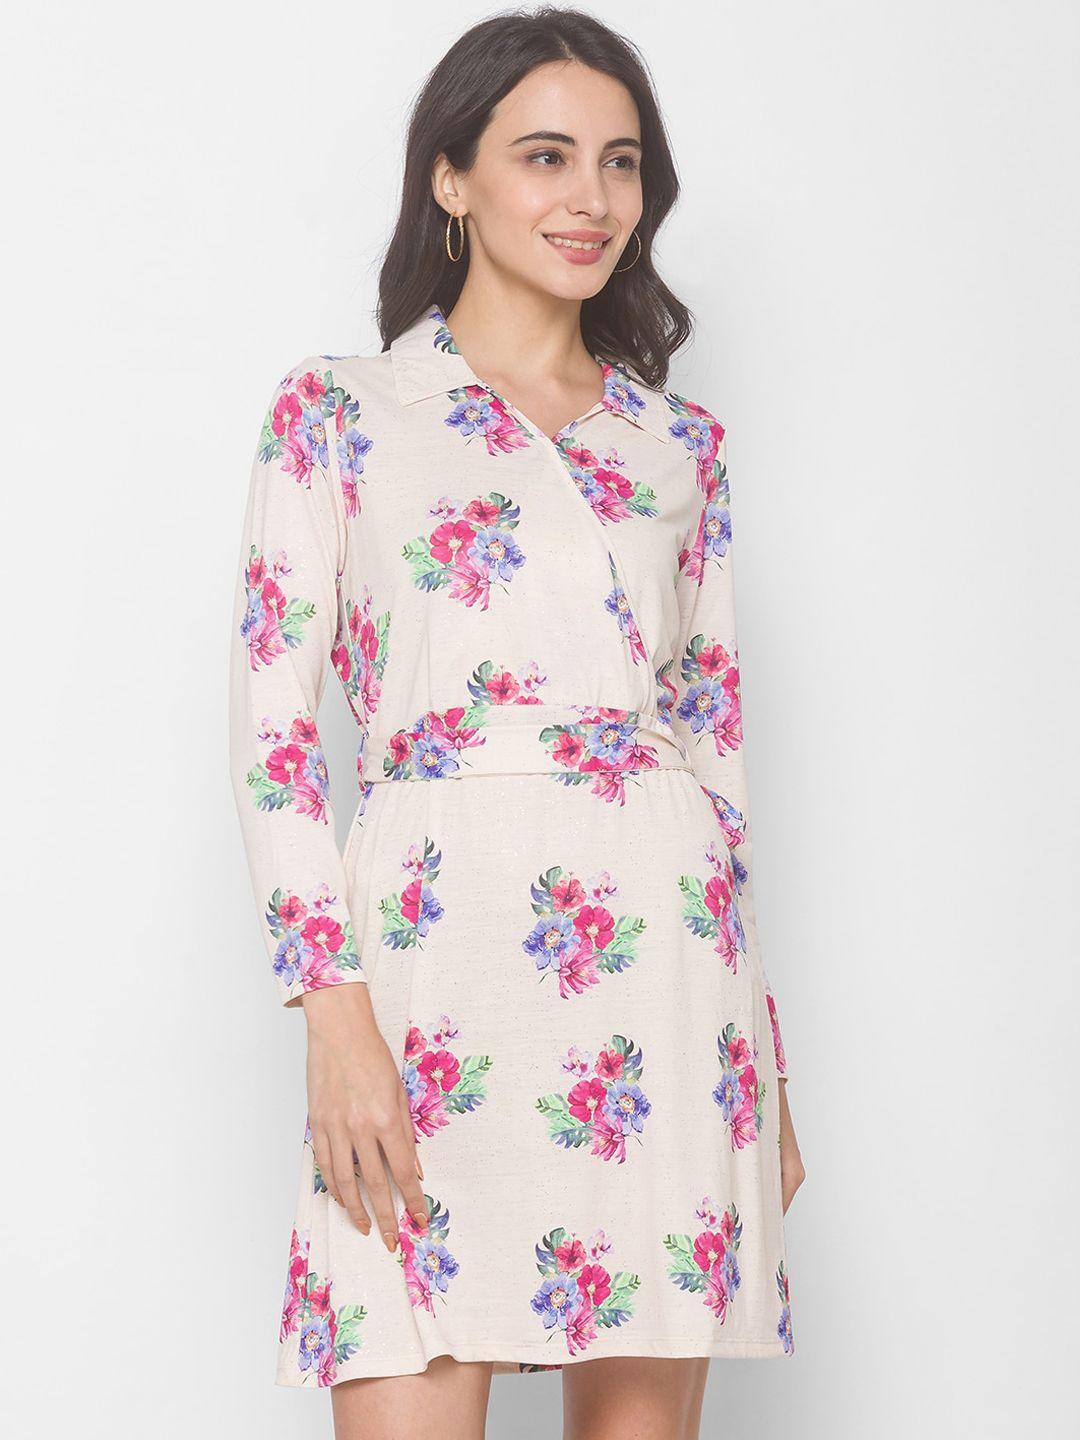 globus-woman-cream-coloured-floral-shirt-dress